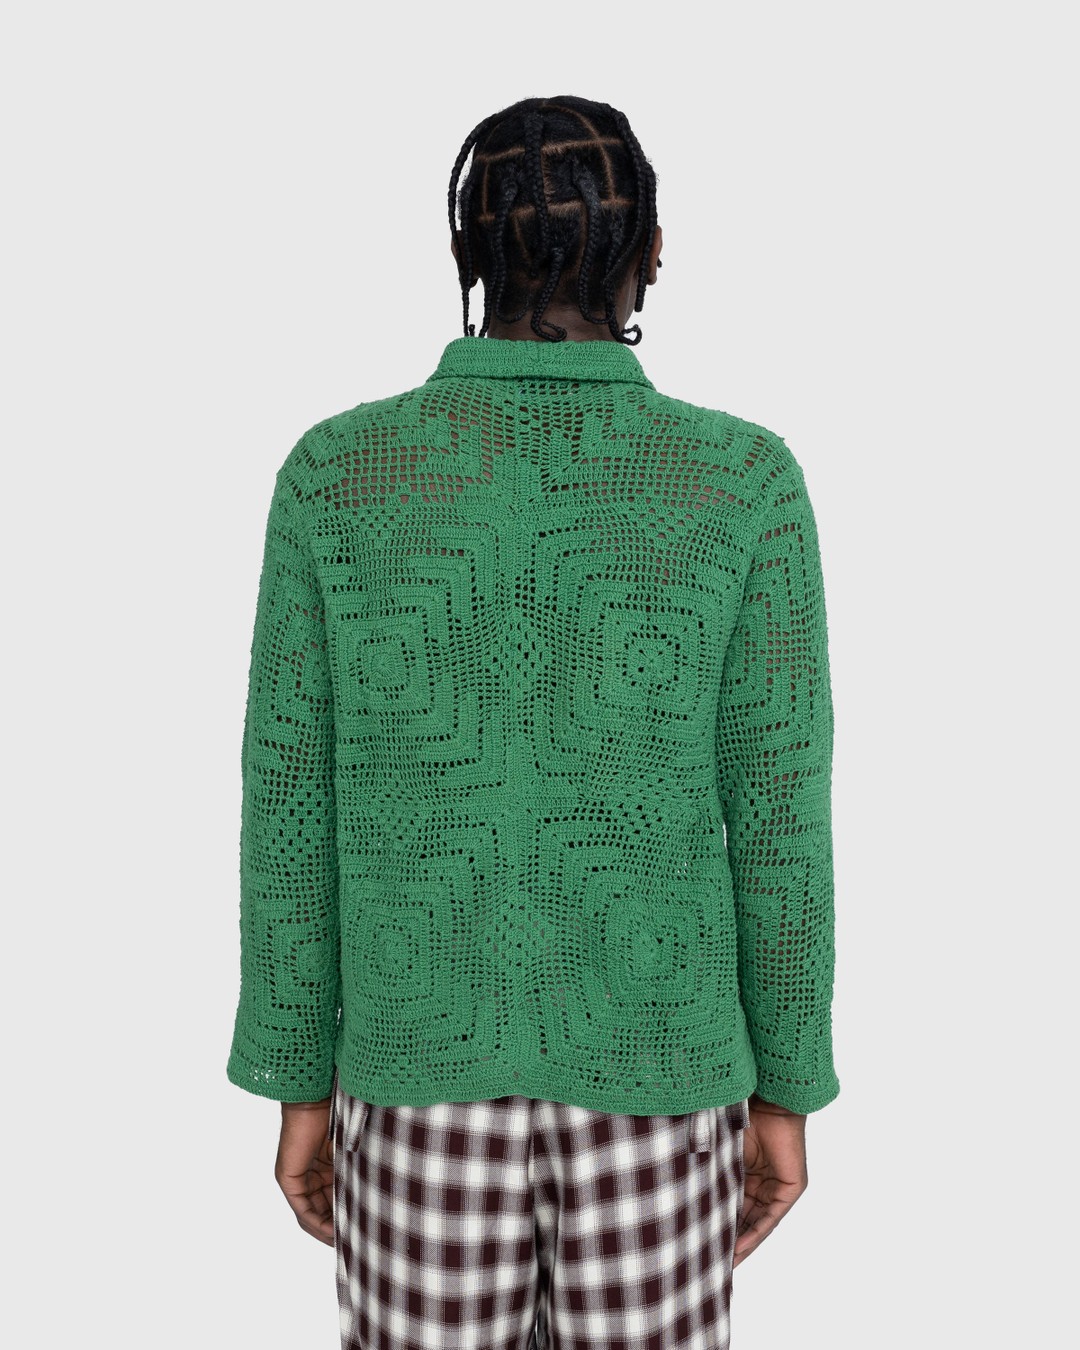 Bode – Crochet Overshirt Green - Overshirt - Green - Image 4